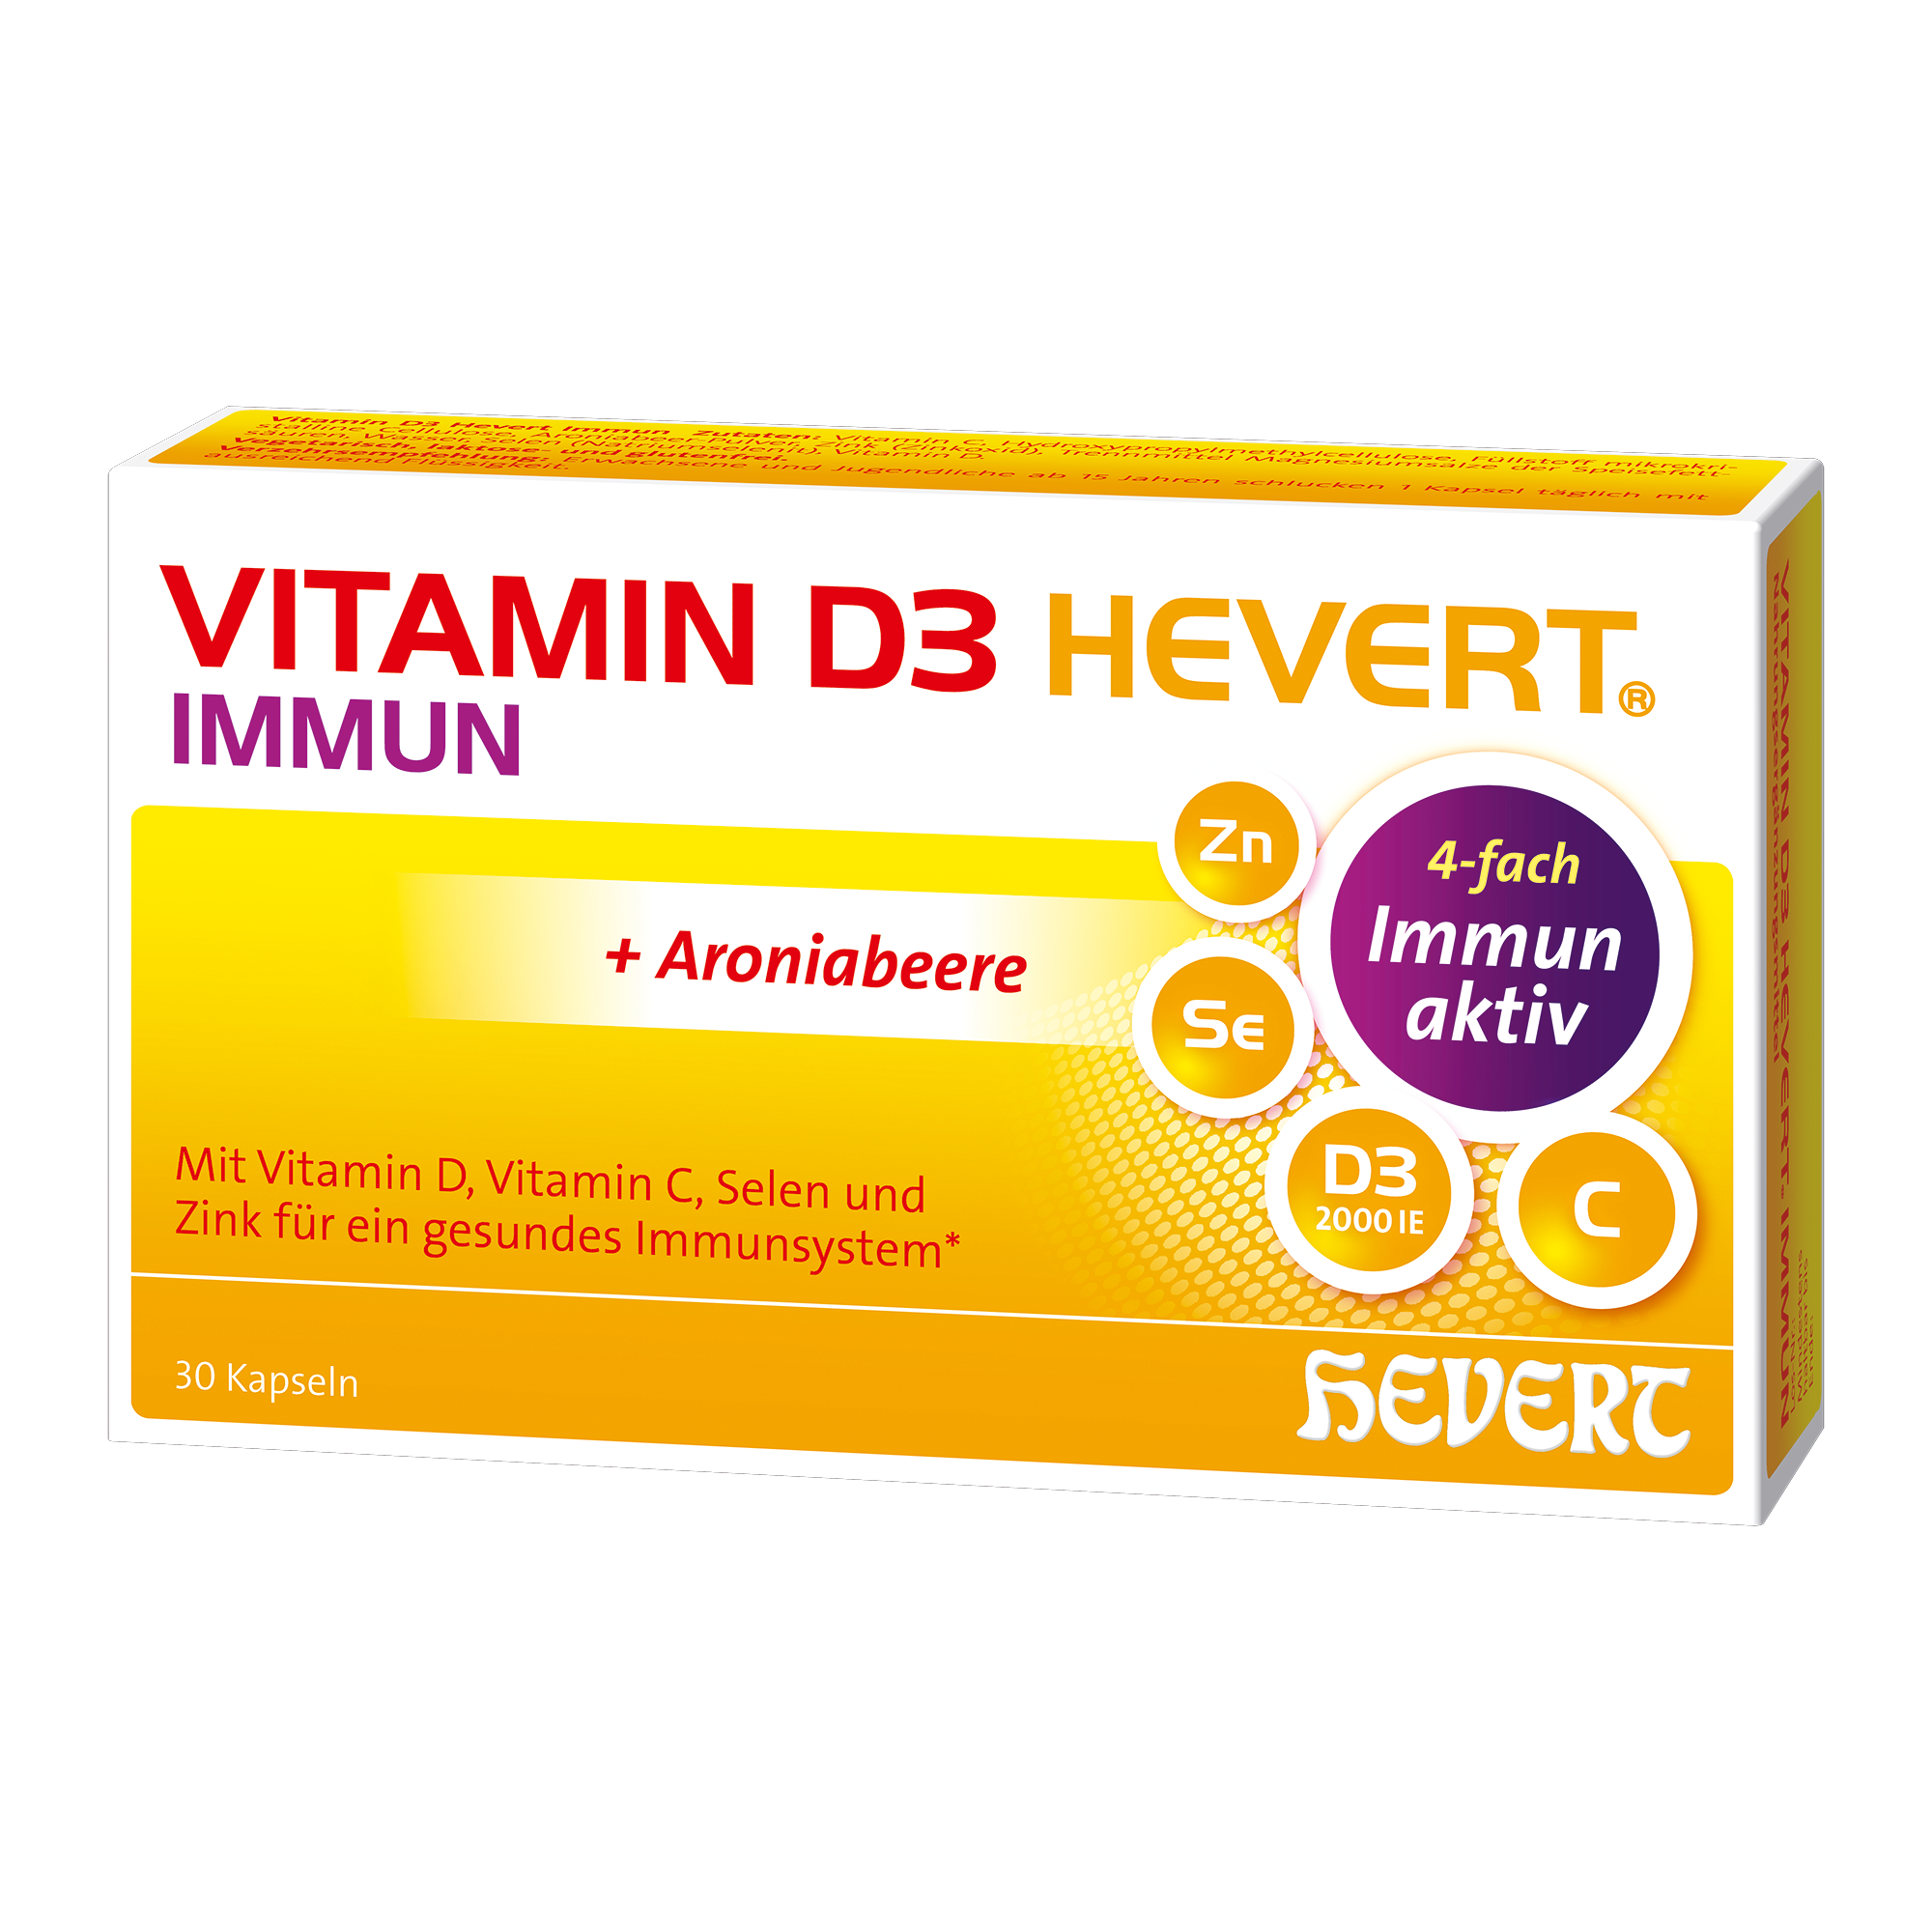 Vitamin D3 Hevert Immun, 30 St. Kapseln Hevert-Testen